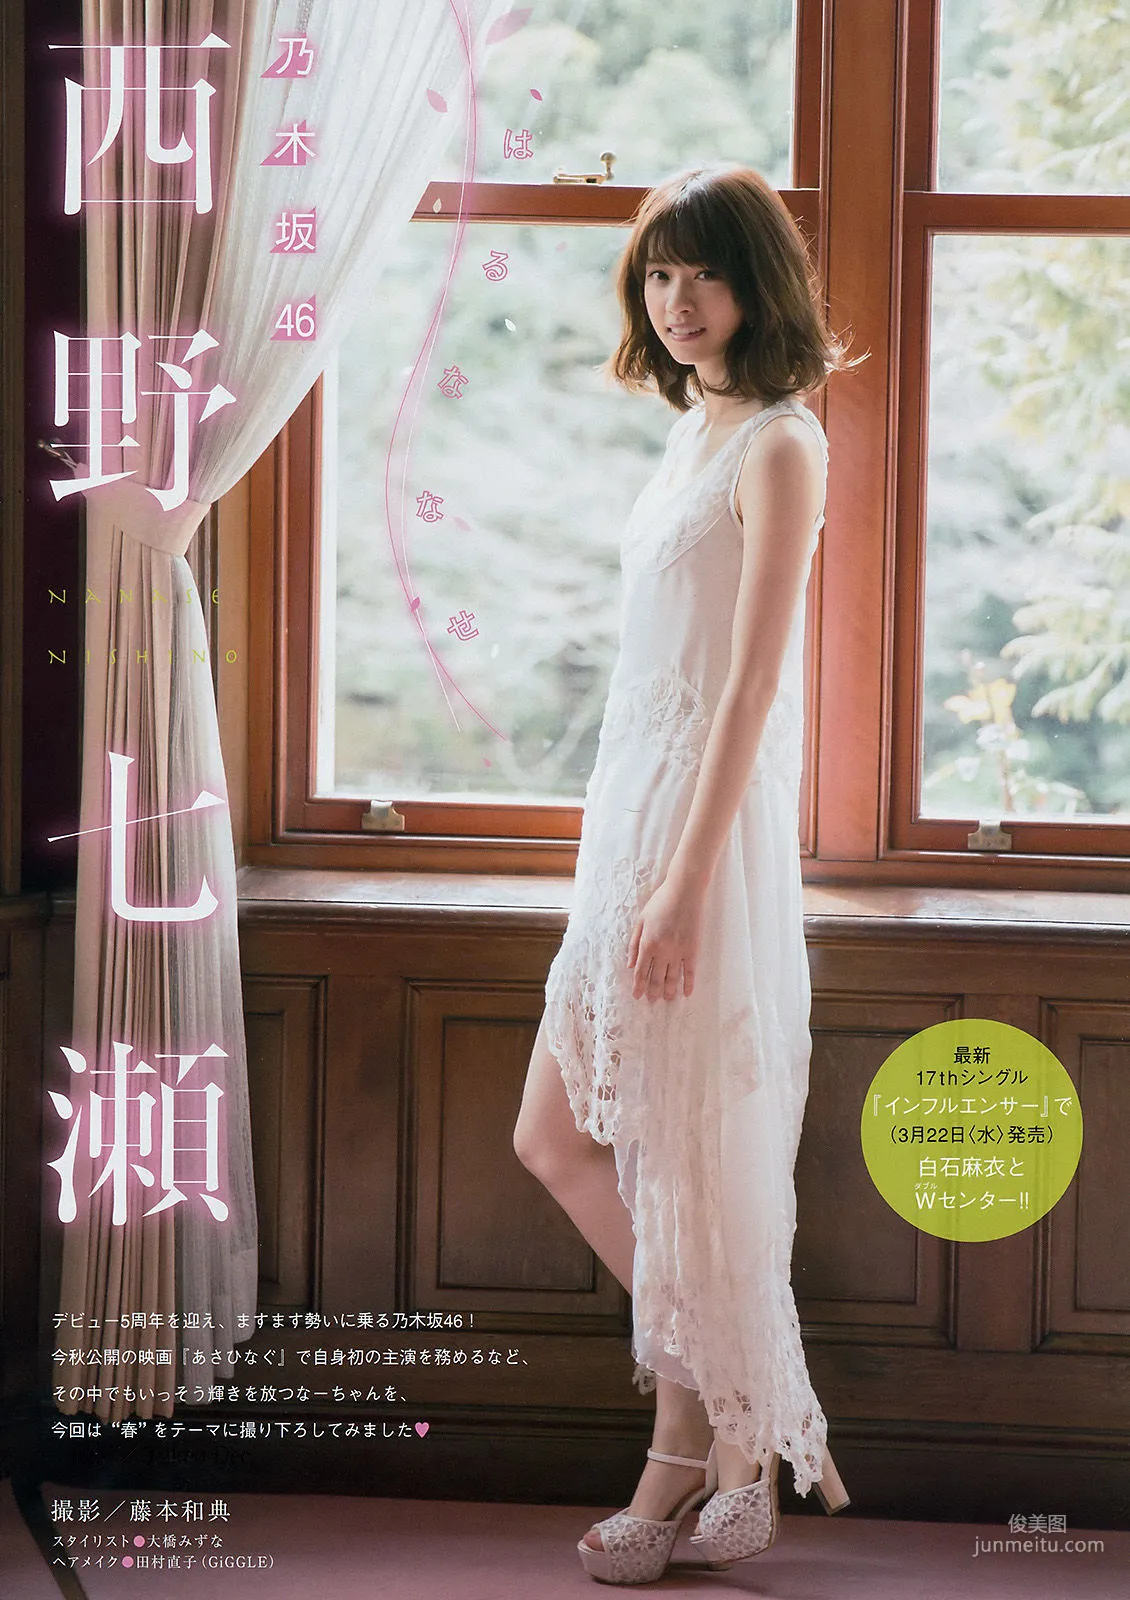 [Young Magazine] 西野七瀬 松永有紗 2017年No.15 写真杂志2